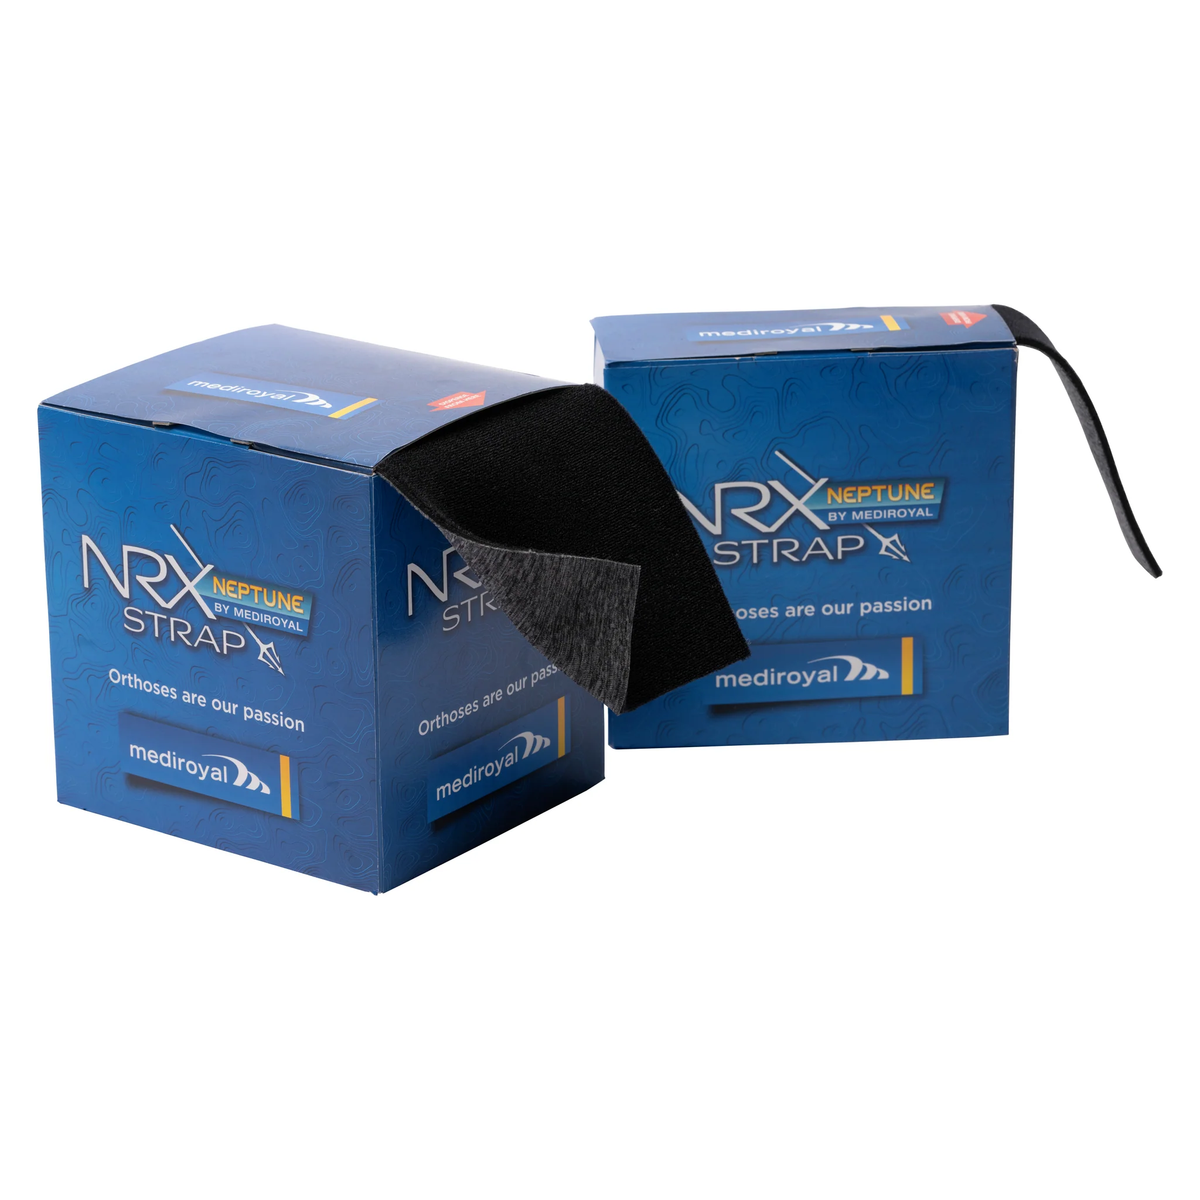 NRX Neptune Strap